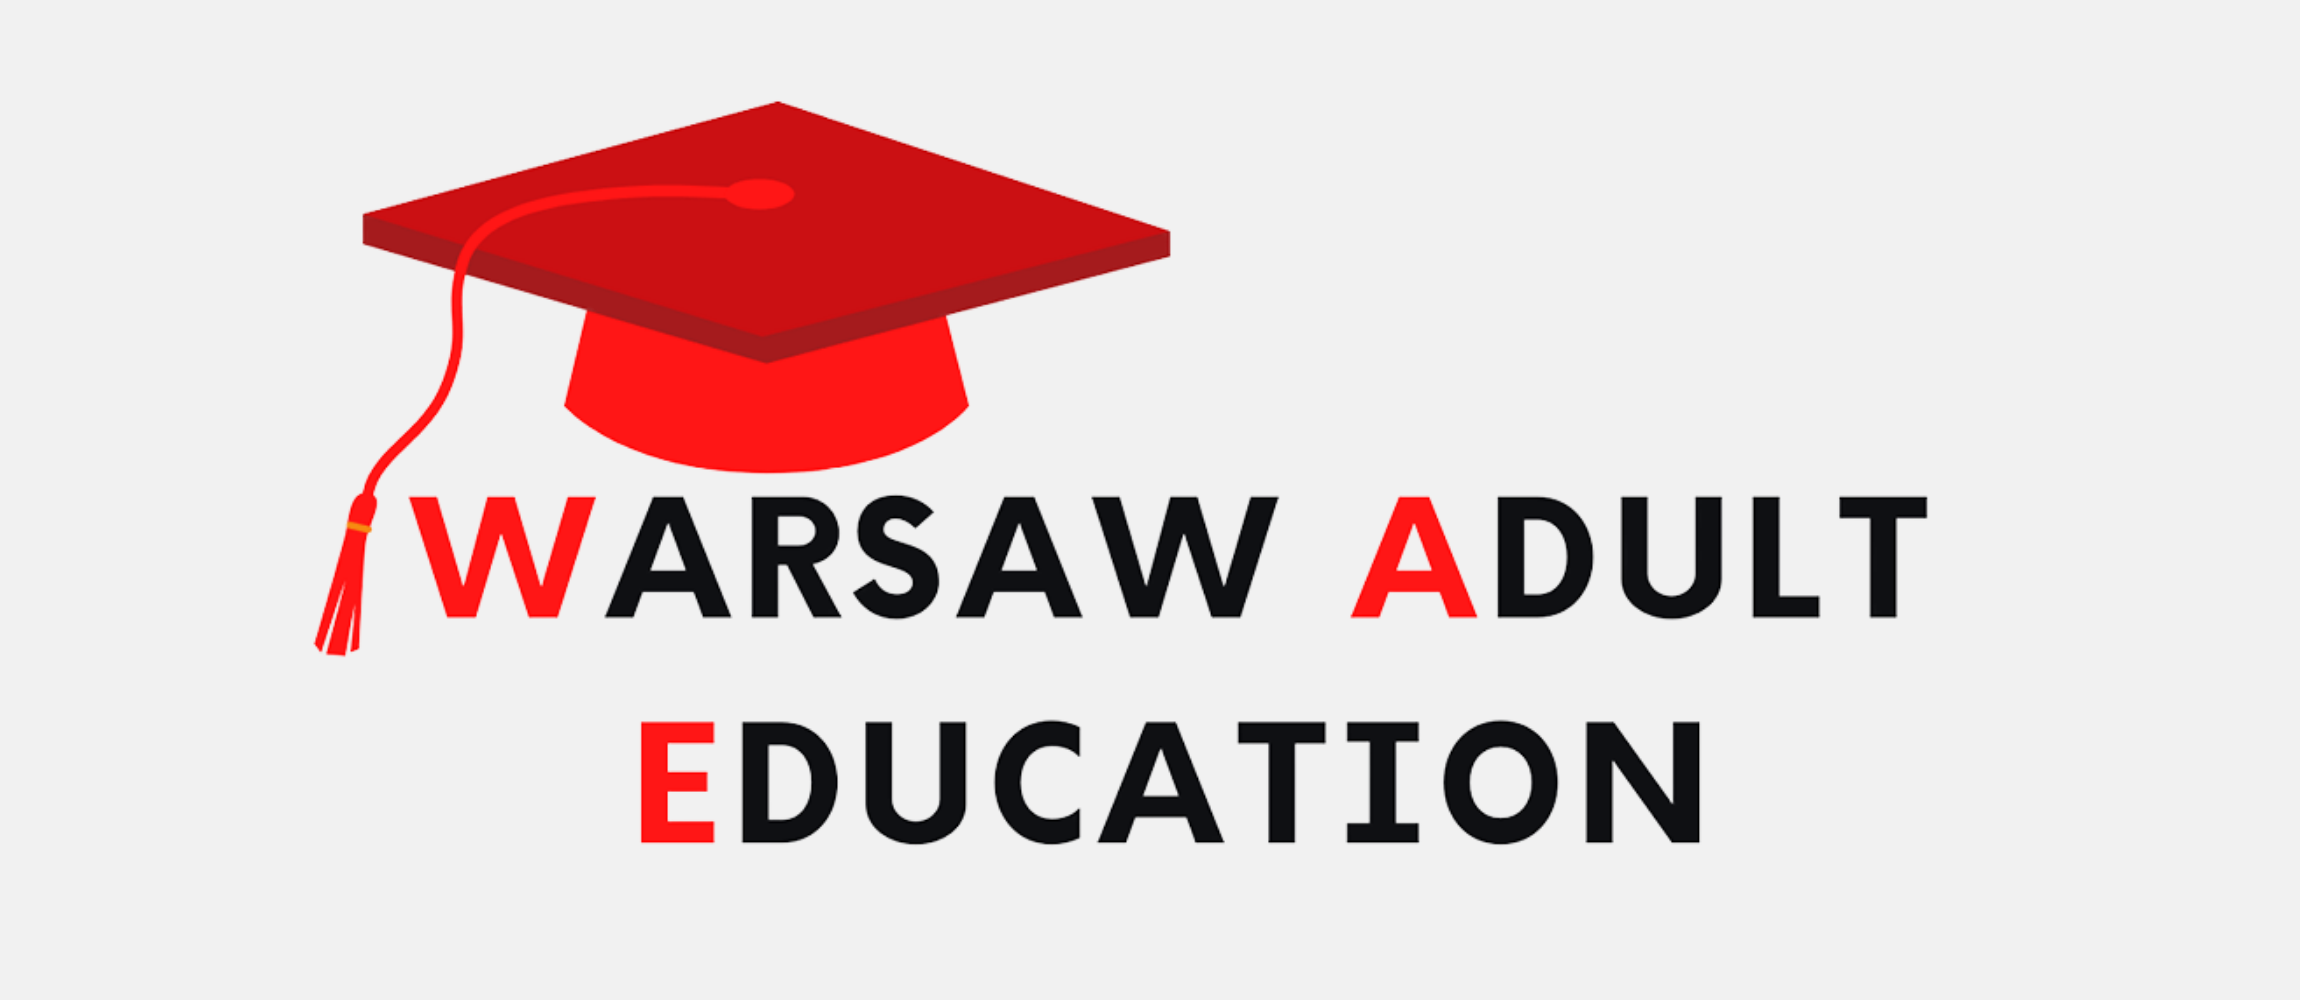 warsaw adult education